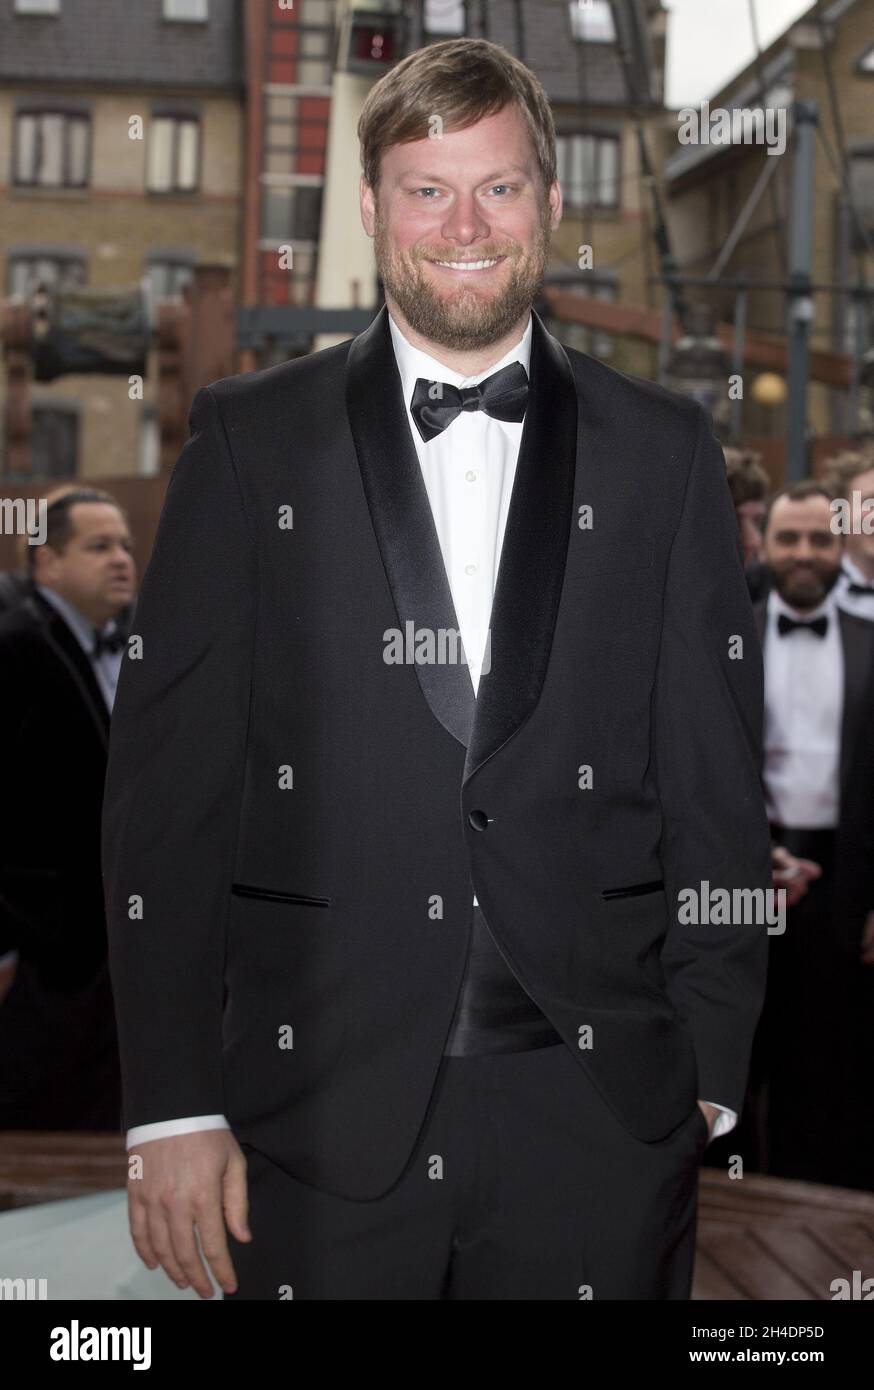 Greg Rize, VP von Double Fine Productions, nimmt am 7. April 2016 an den British Academy Games Awards Teil, während EGX Rezzed im Tobacco Dock, East London, stattfand. Stockfoto